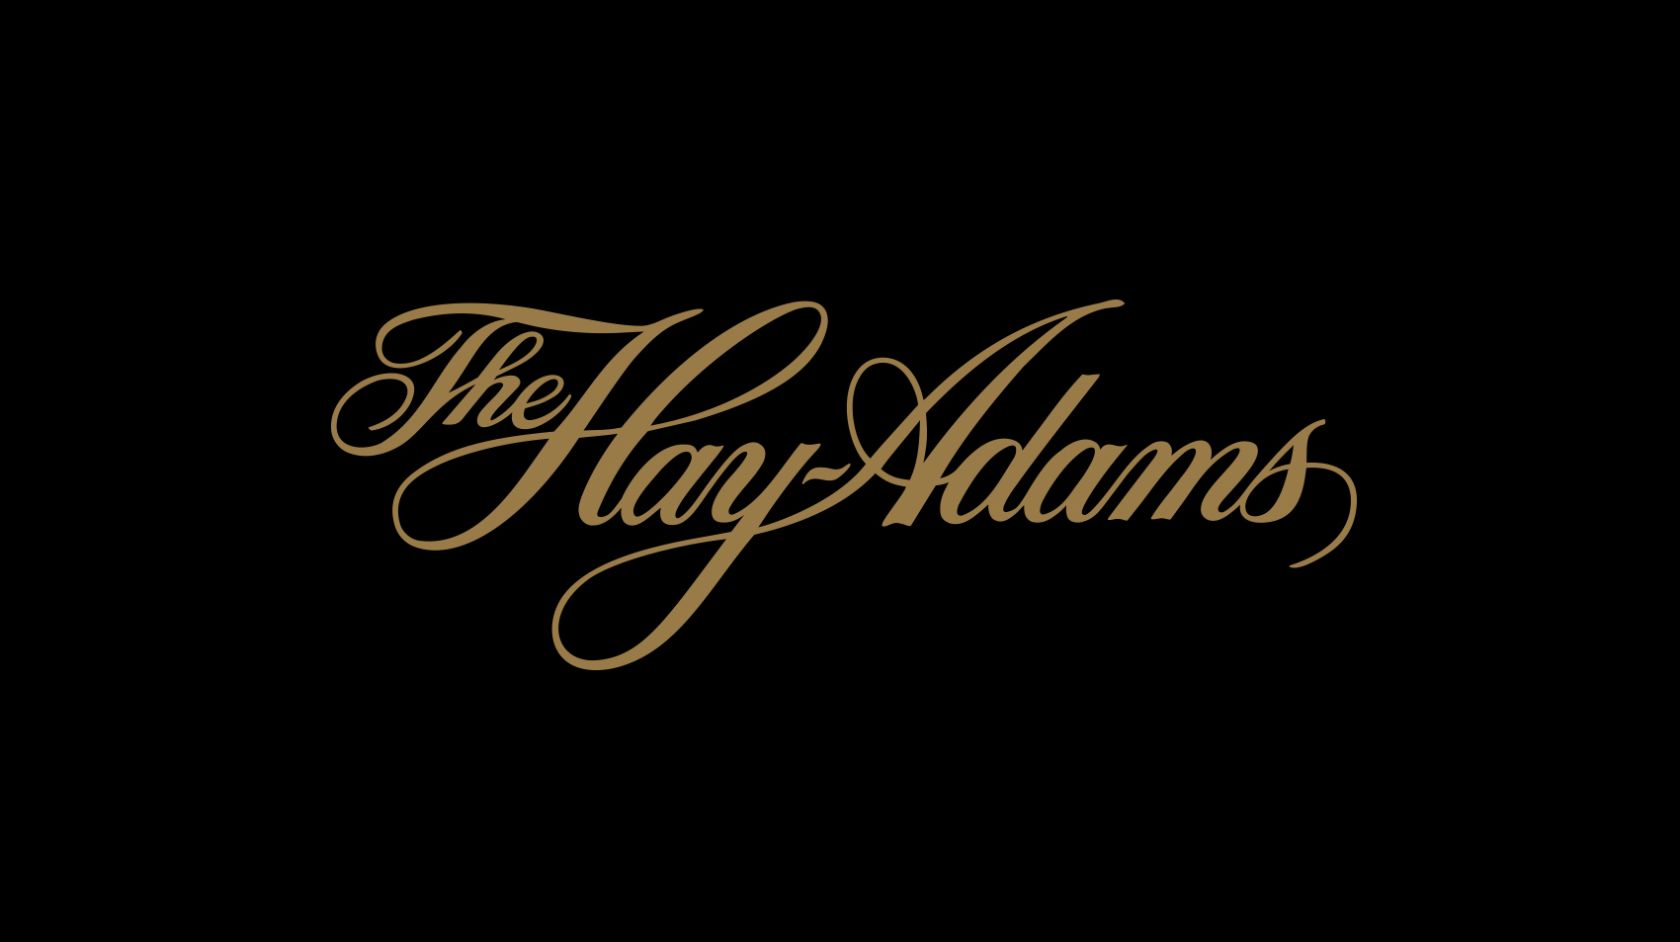 Hay-Adams gold logo on black background